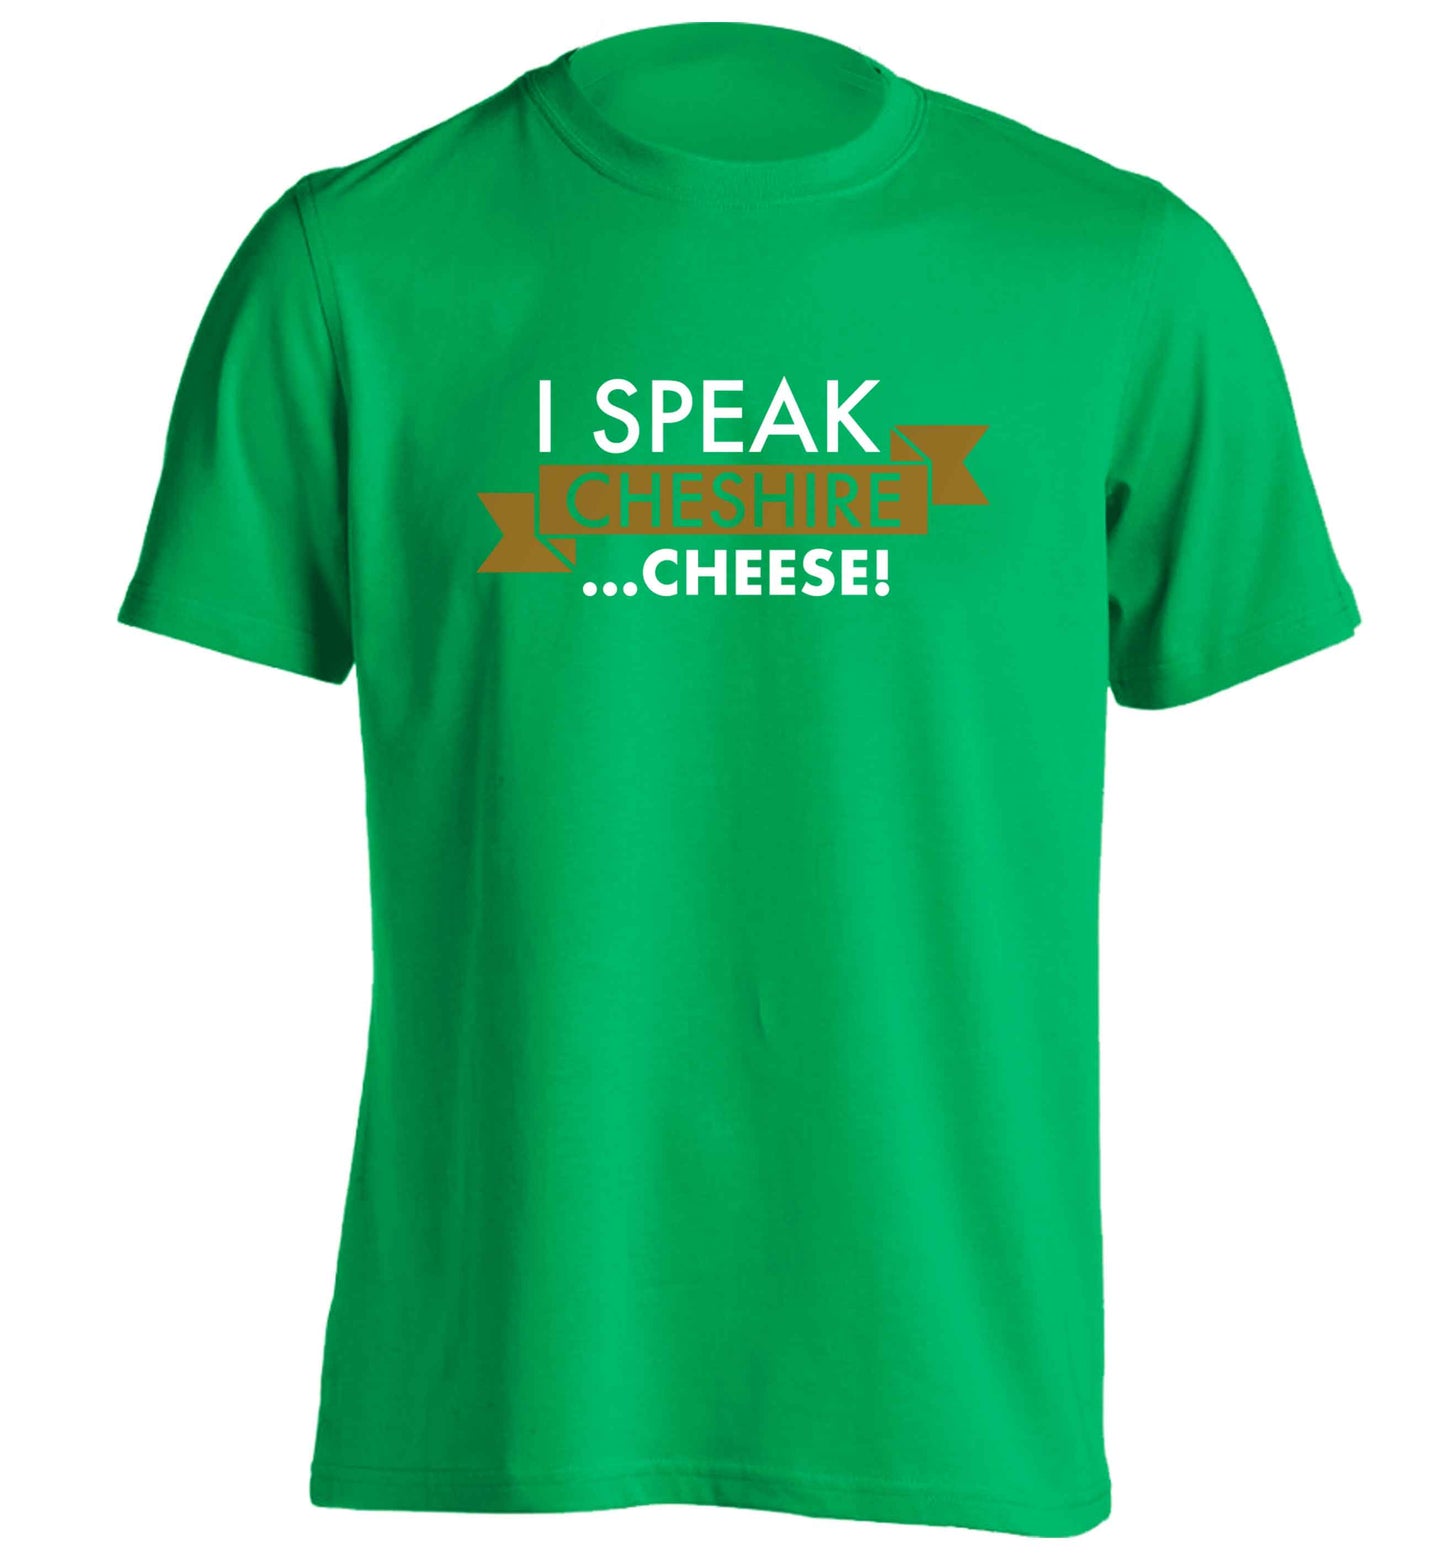 I speak Cheshire cheese adults unisex green Tshirt 2XL